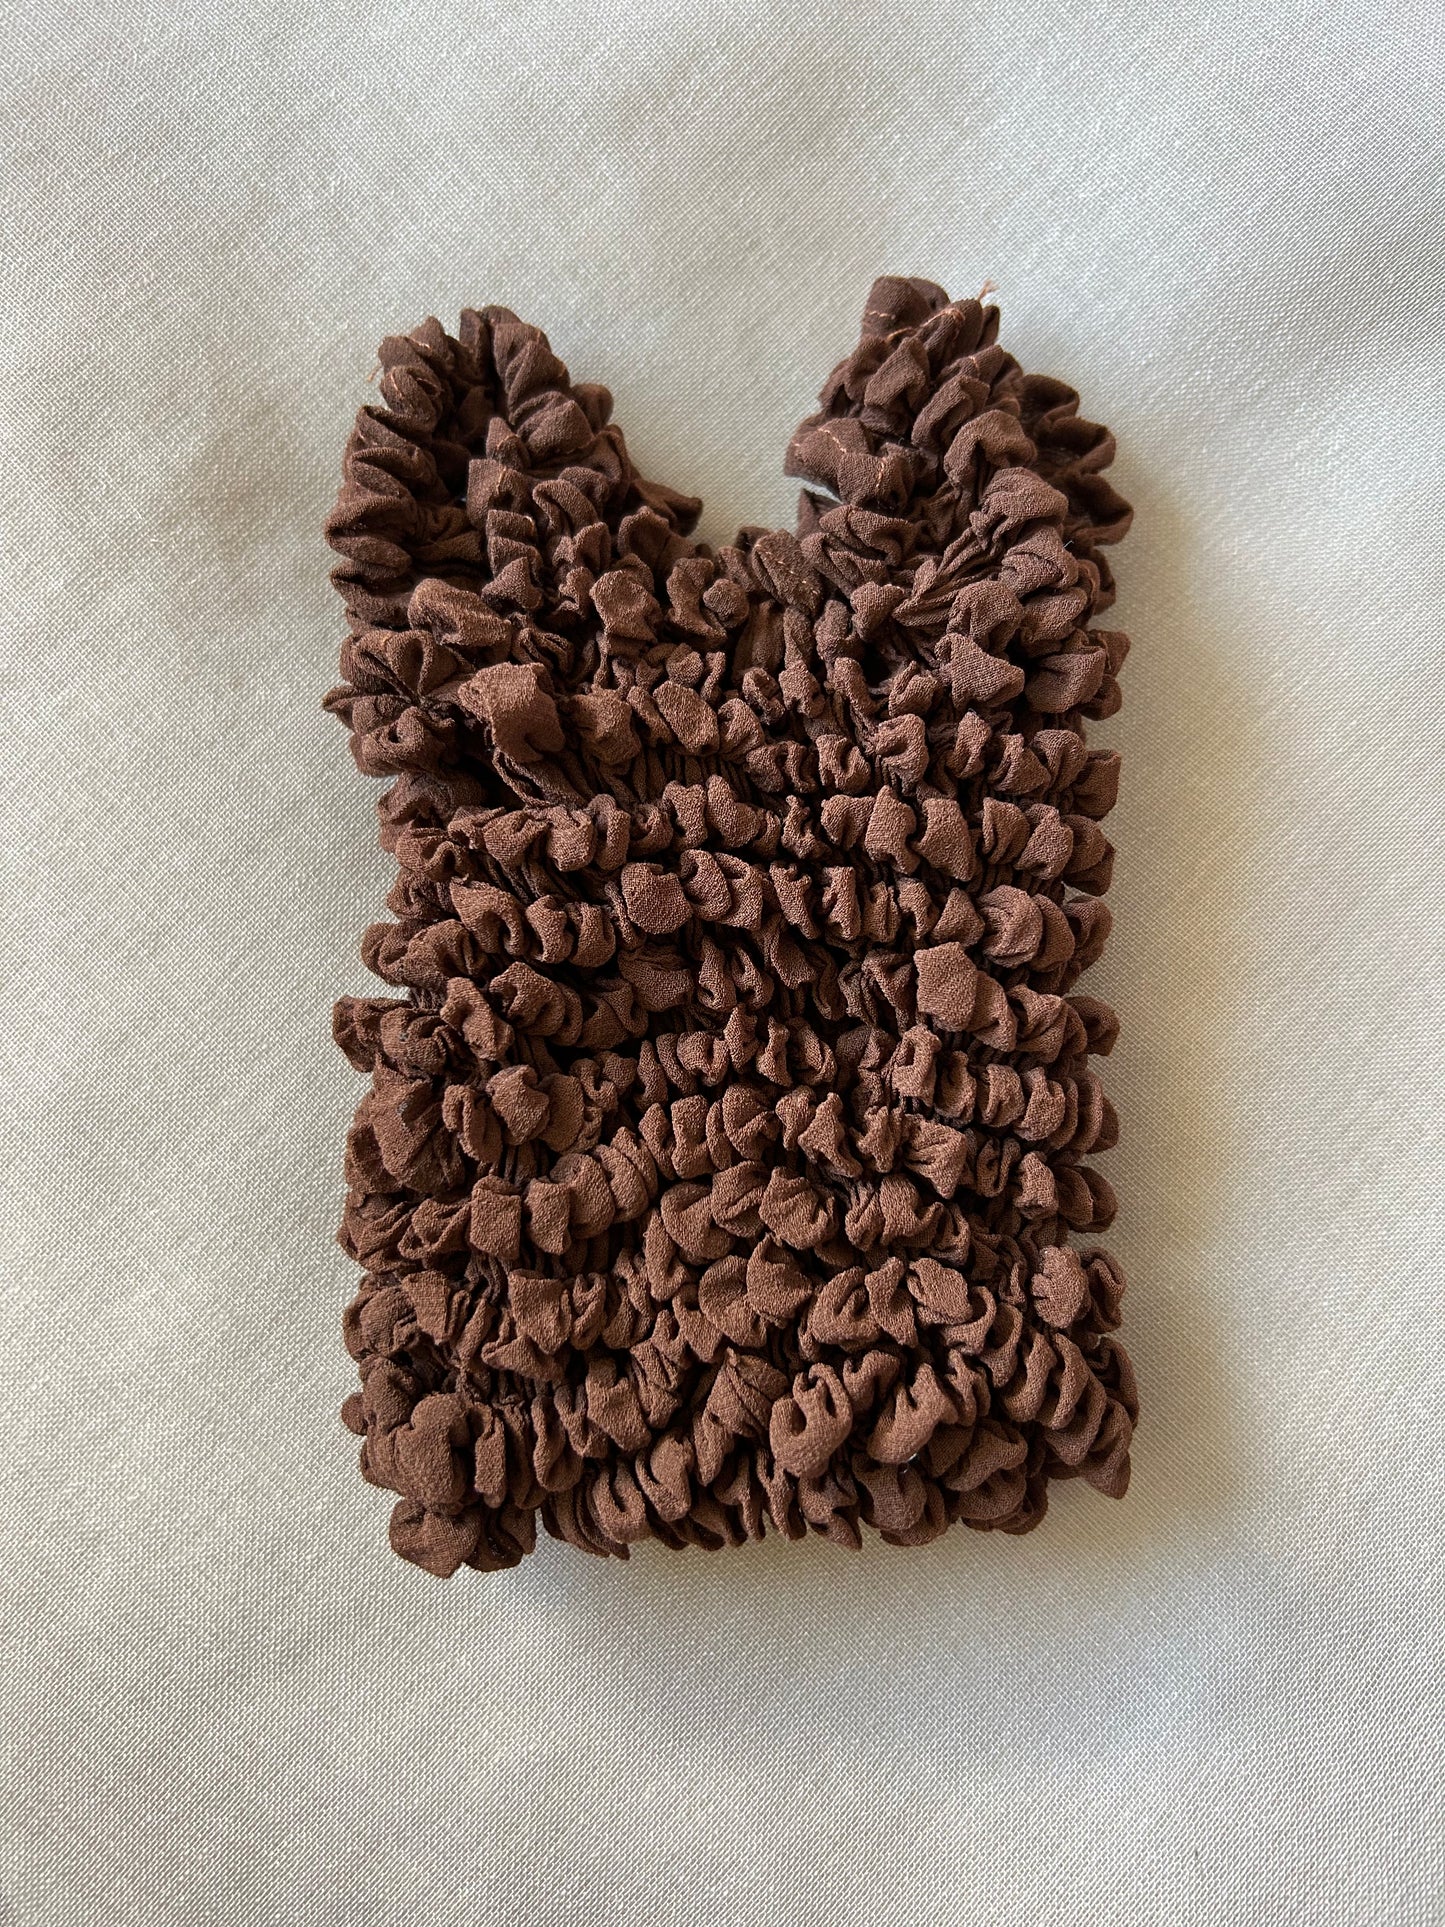 Chocolate brown mesh thin Foldable Reusable grocery shopping bag-flex totes